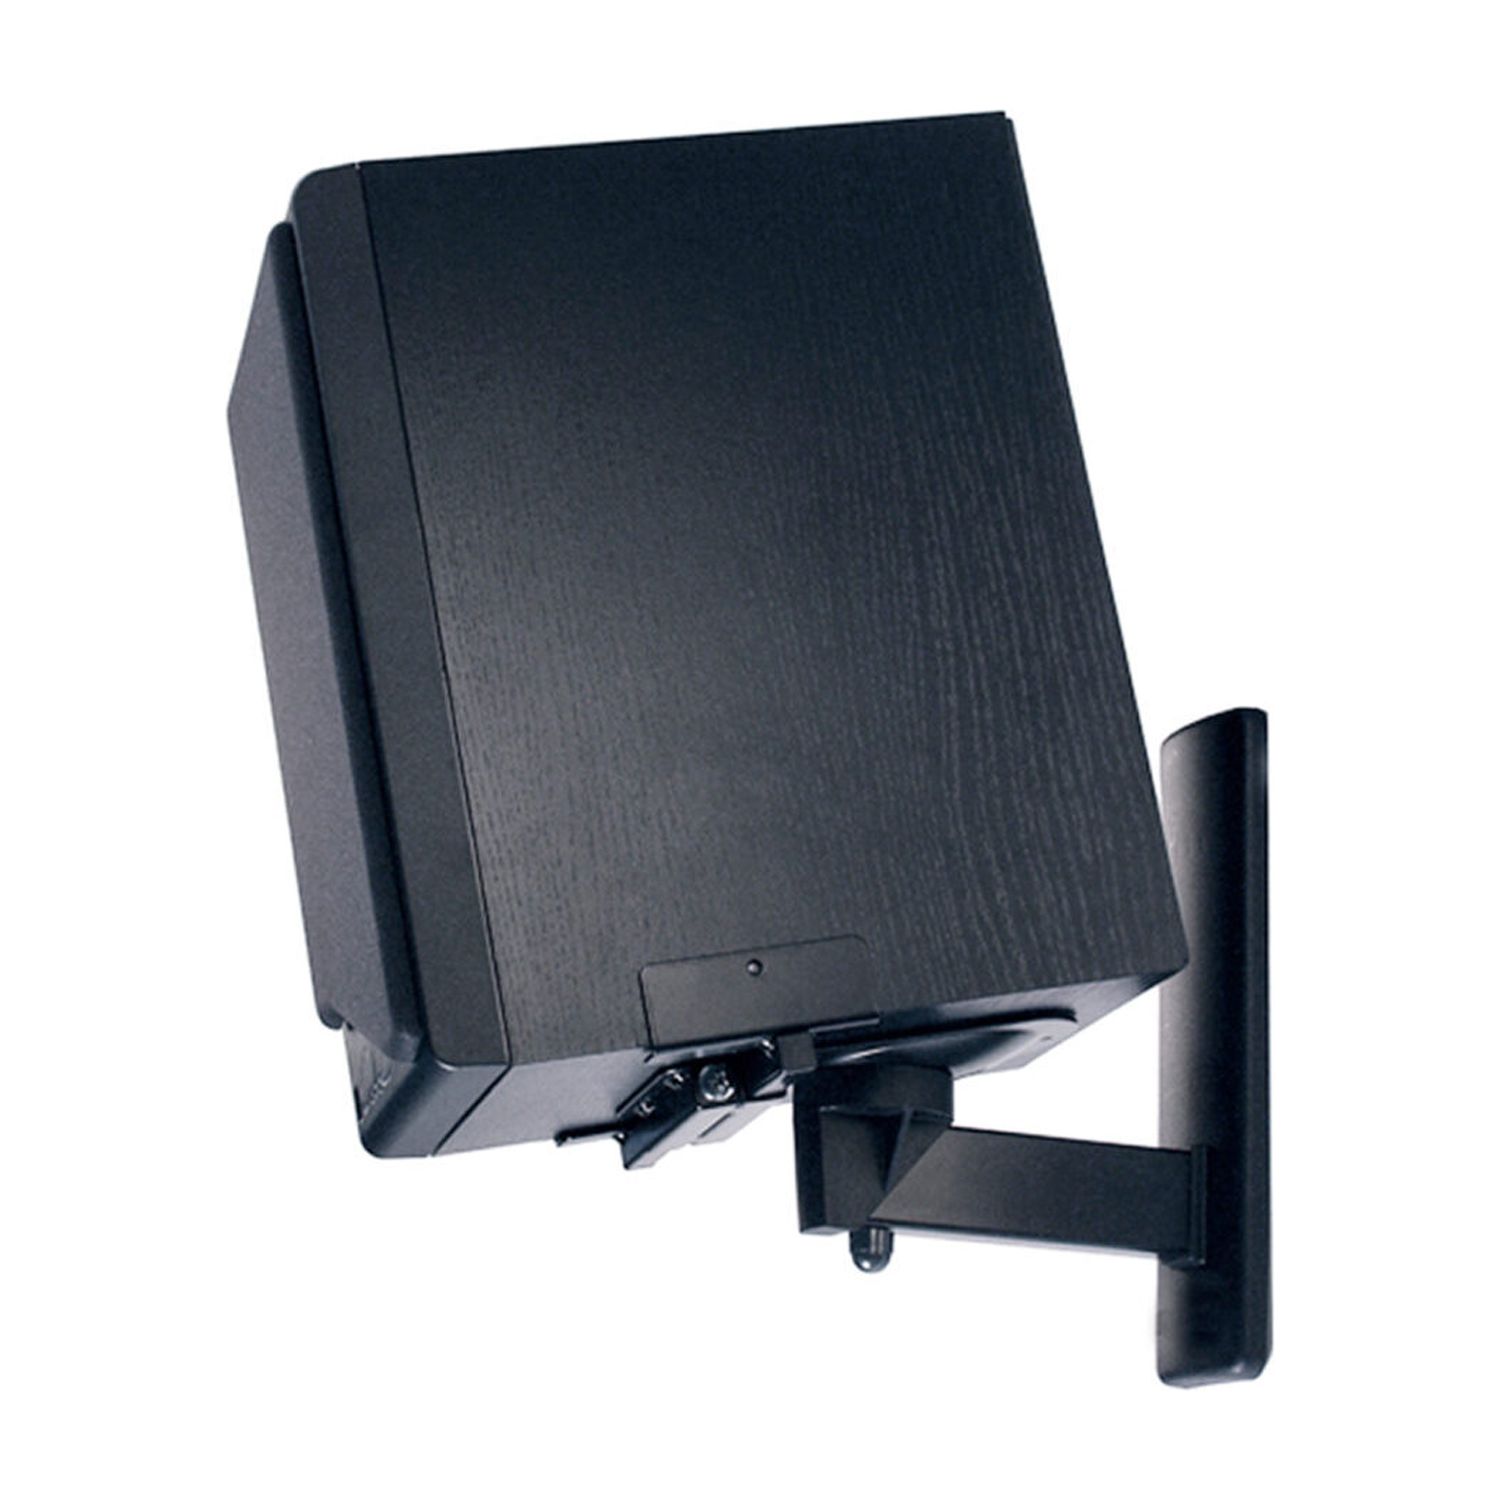 Rocelco B-Tech Ultra Grip-Pro Speaker Mount in Black Finish (Set of 2) - image 4 of 4